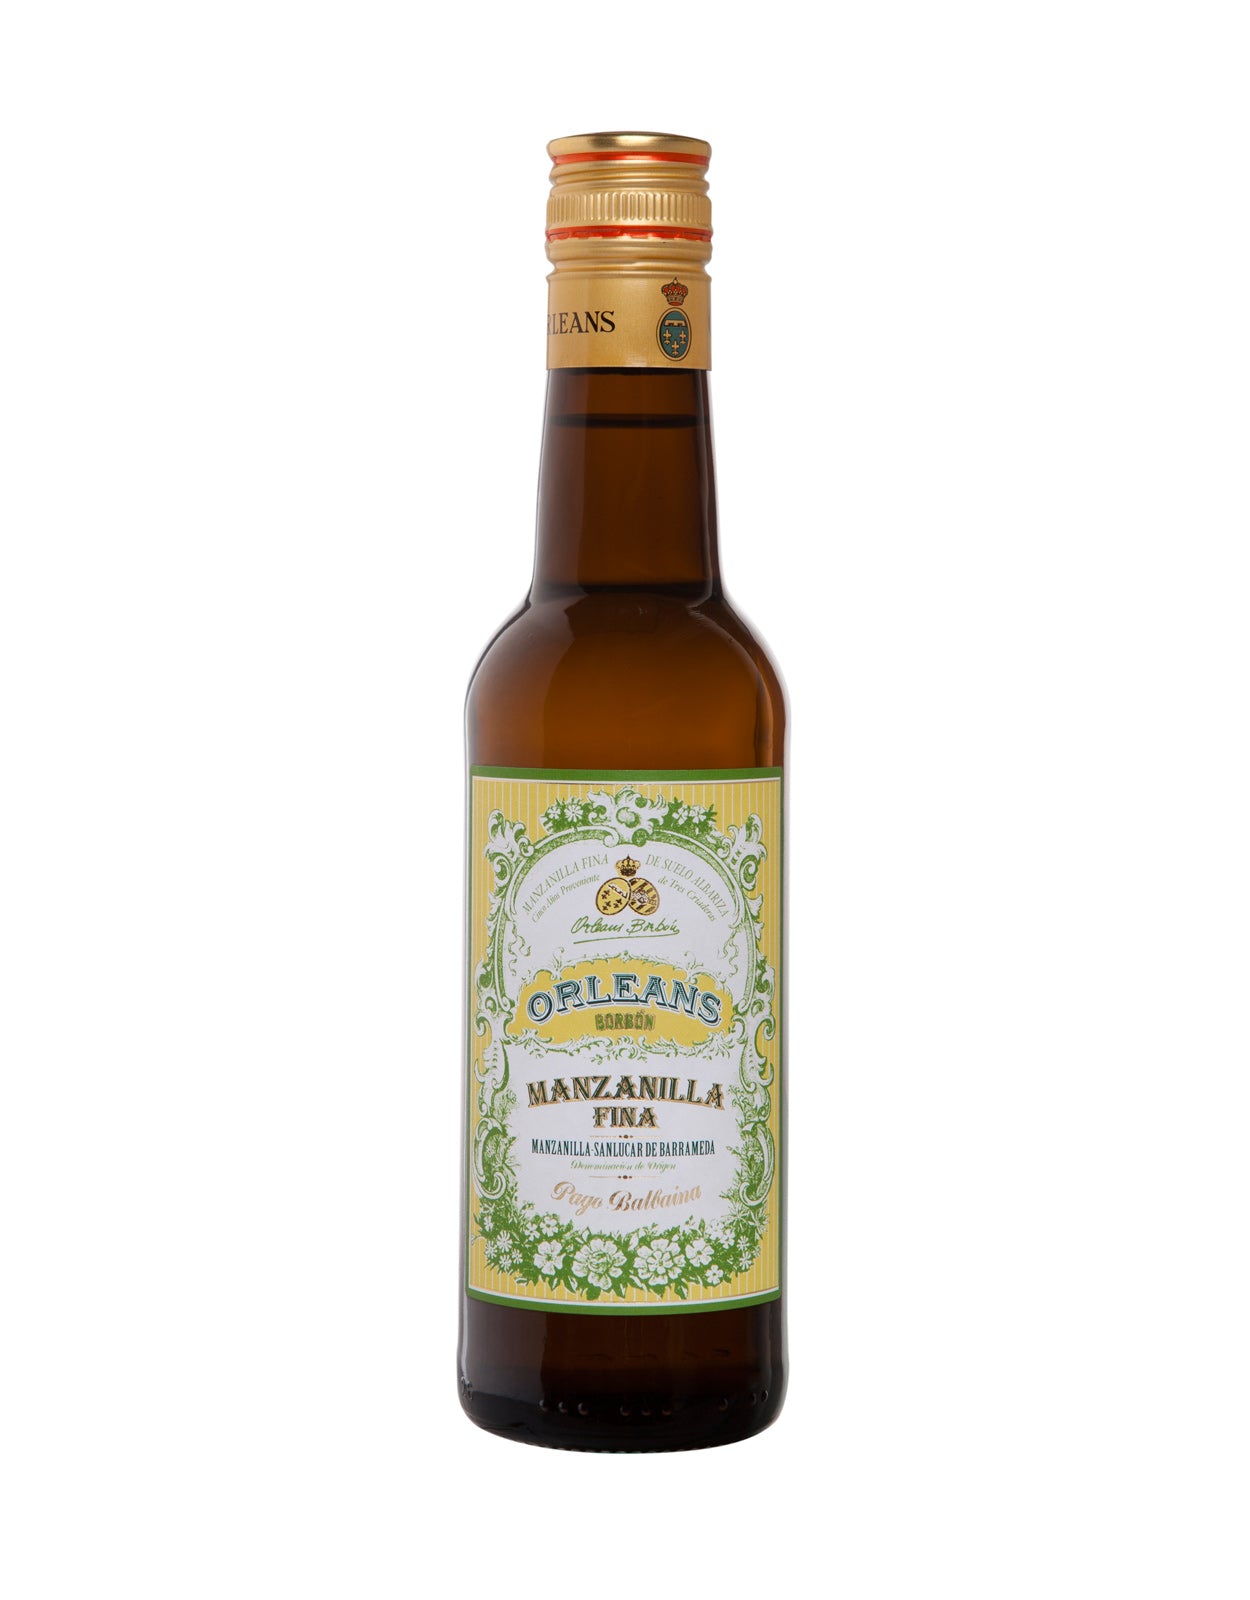 Orleans Borbon Manzanilla Fina Sherry - 375 ml